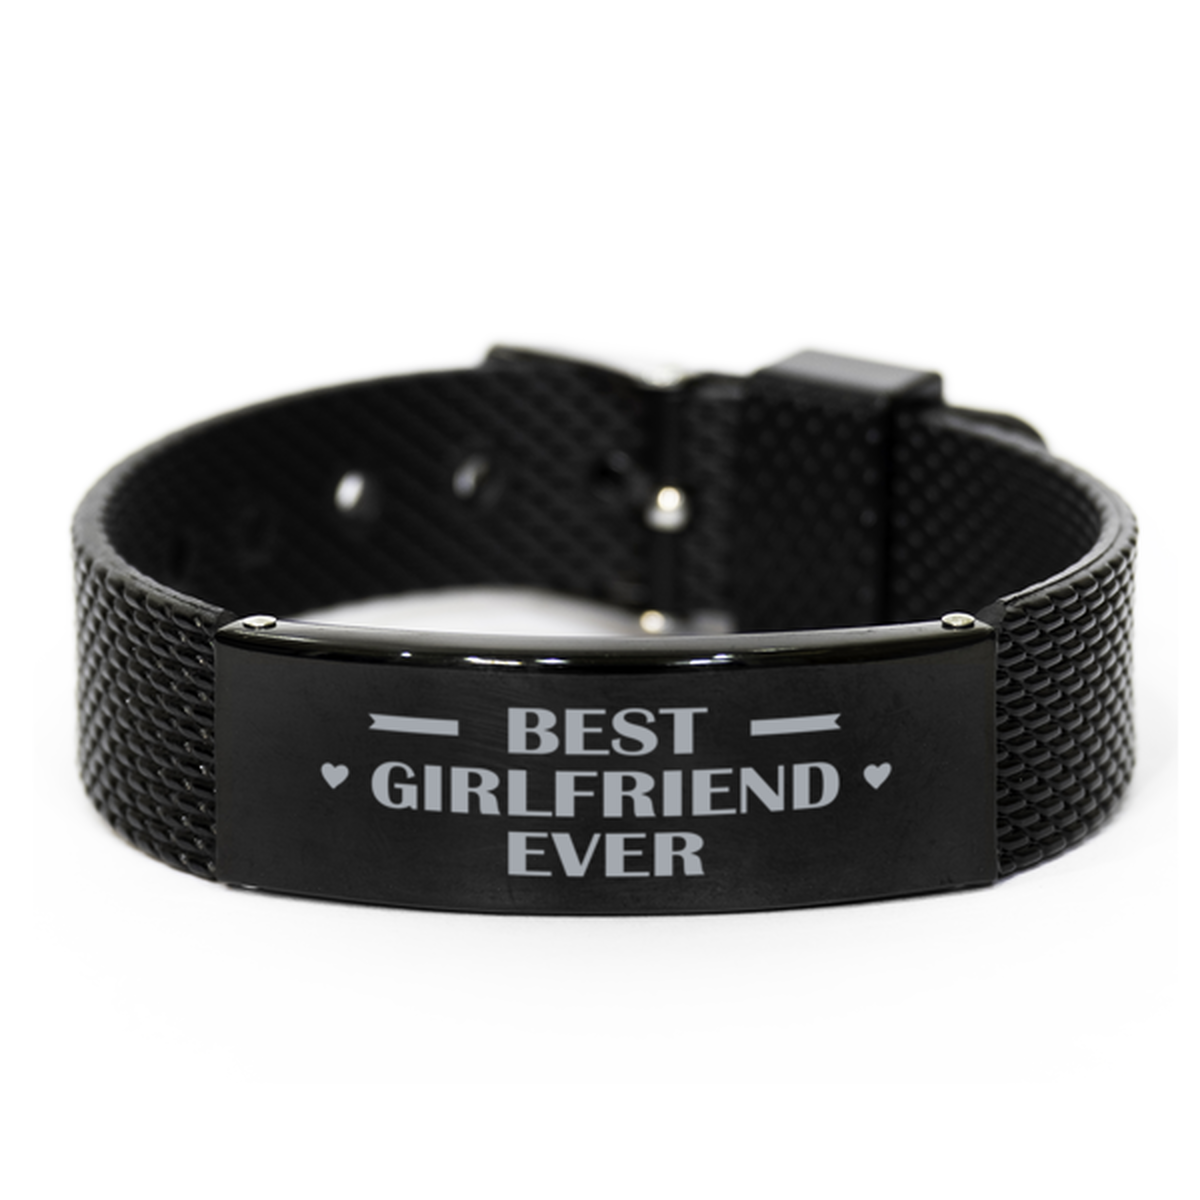 Best Girlfriend Ever Girlfriend Gifts, Gag Engraved Bracelet For Girlfriend, Best Family Gifts For Women